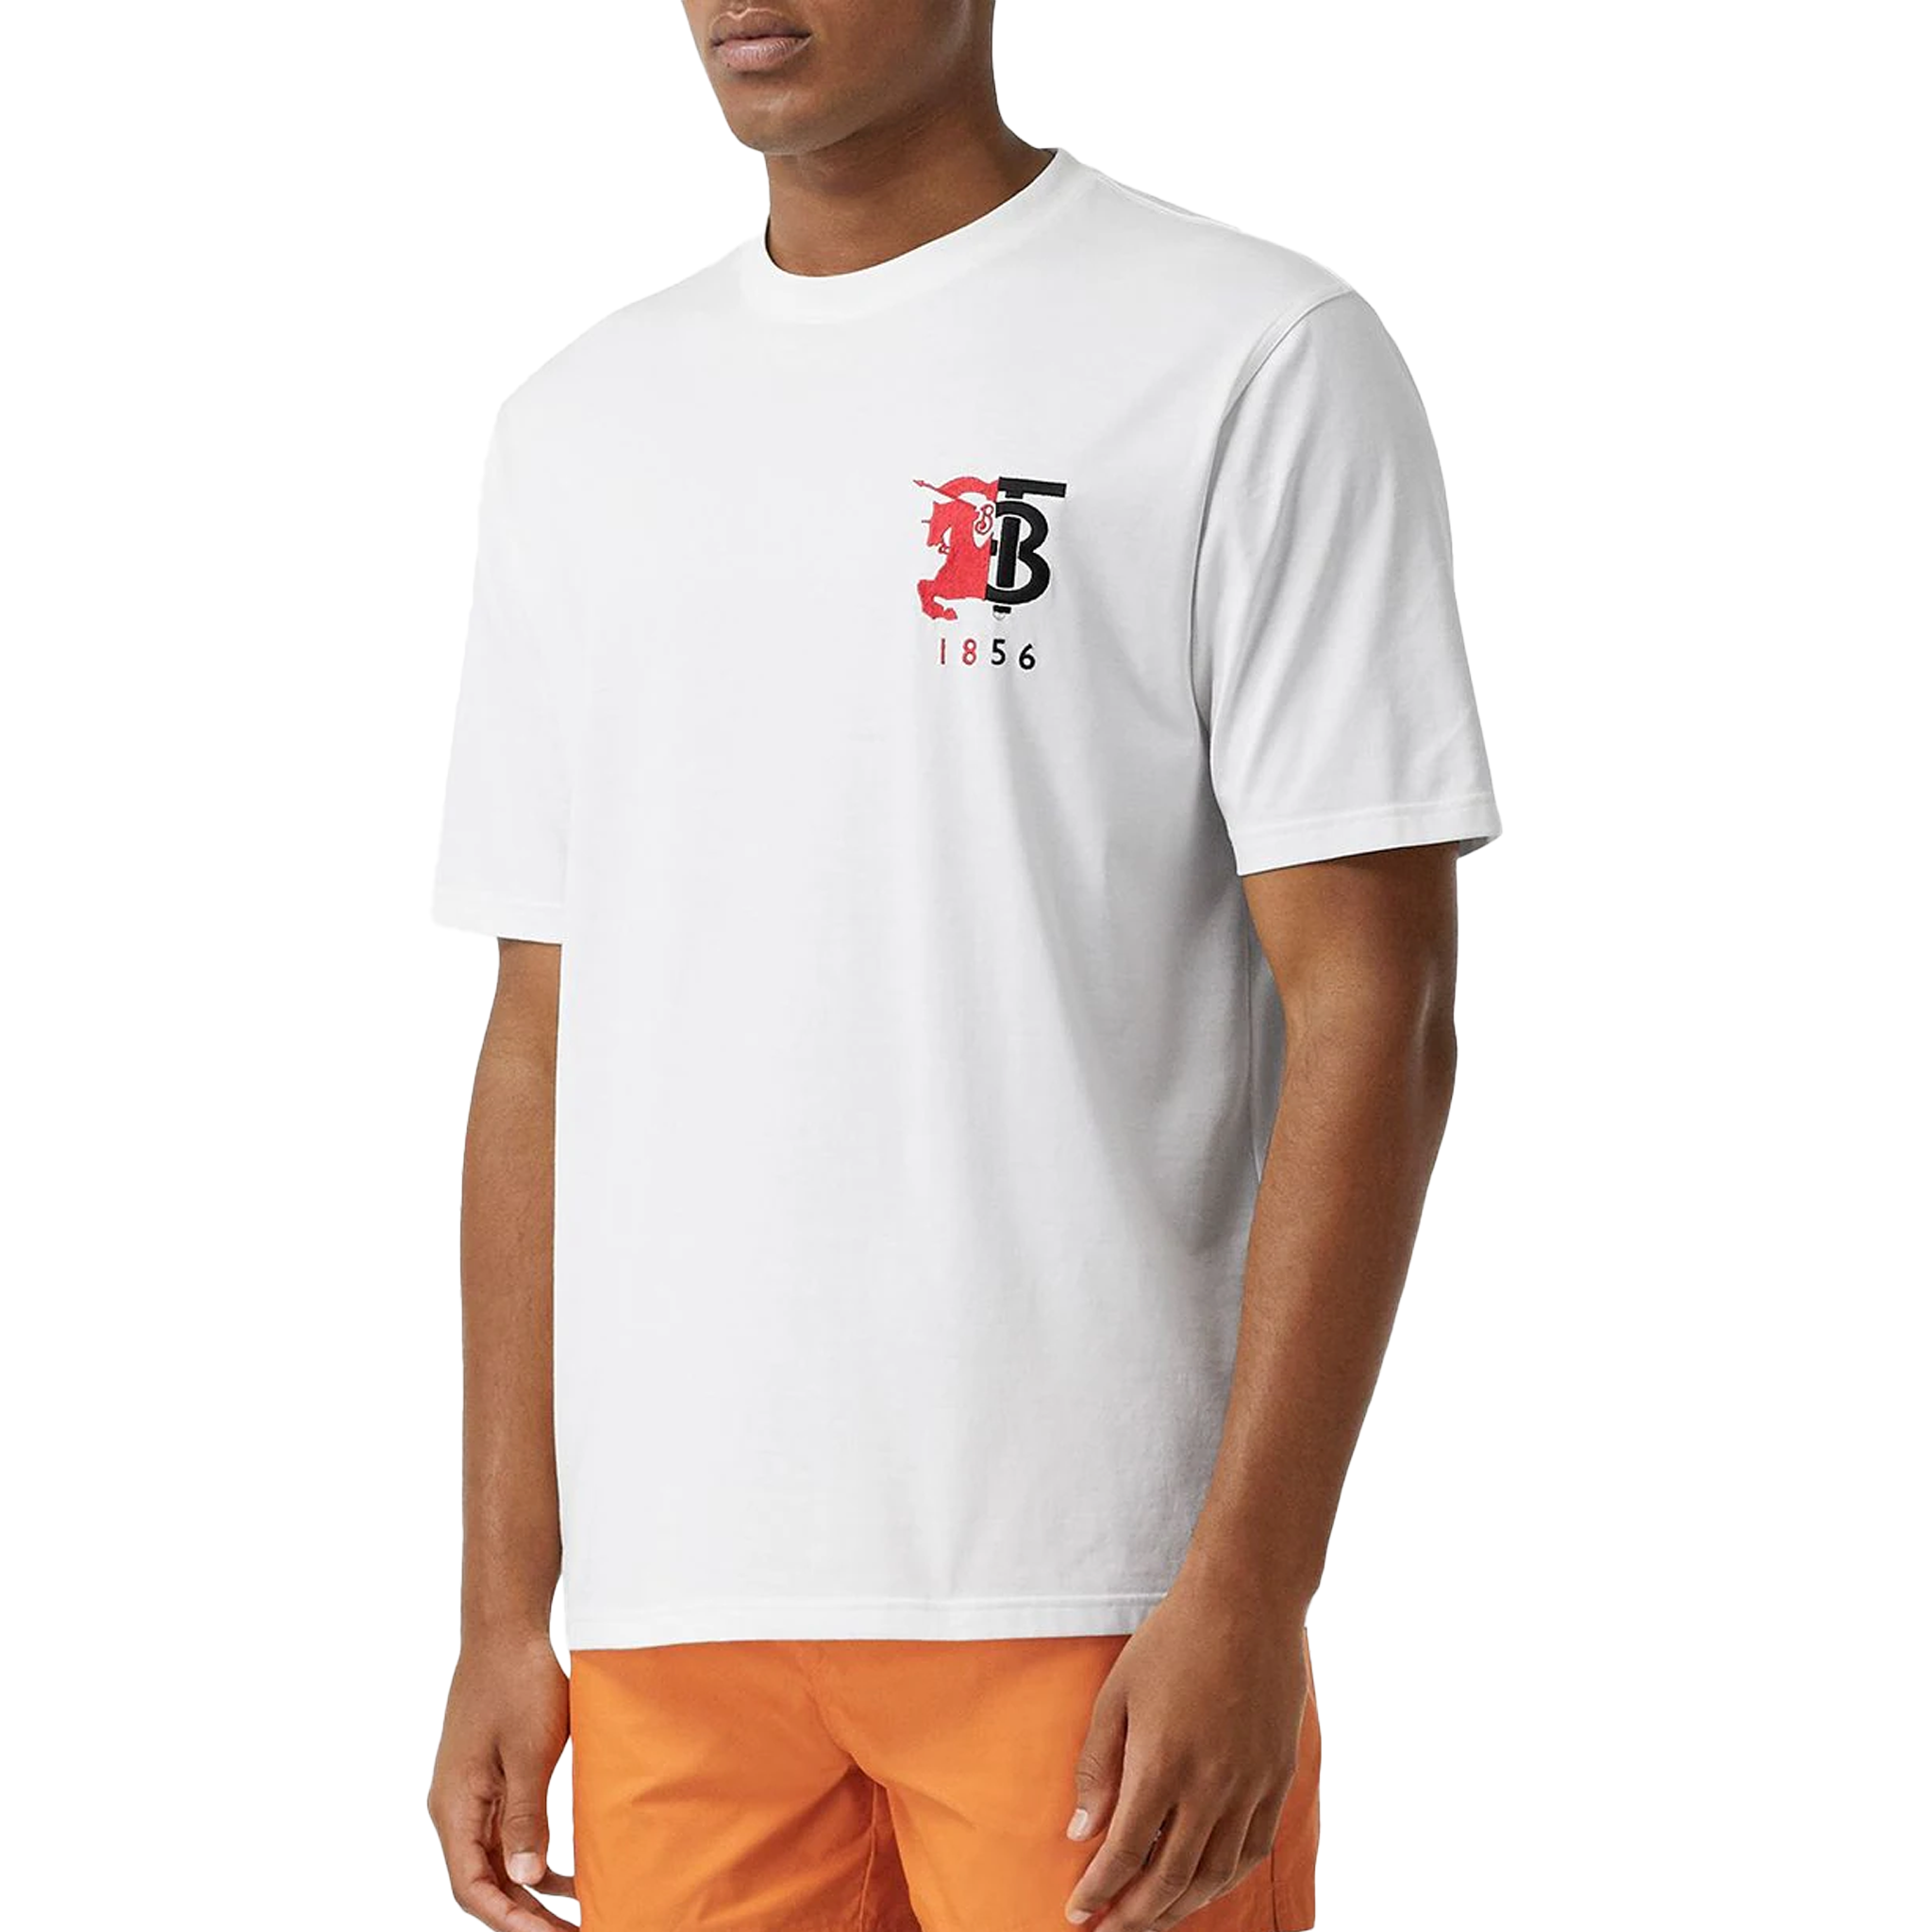 Grisling last sti BURBERRY 1856 BT Logo T-Shirt White Men's Sale